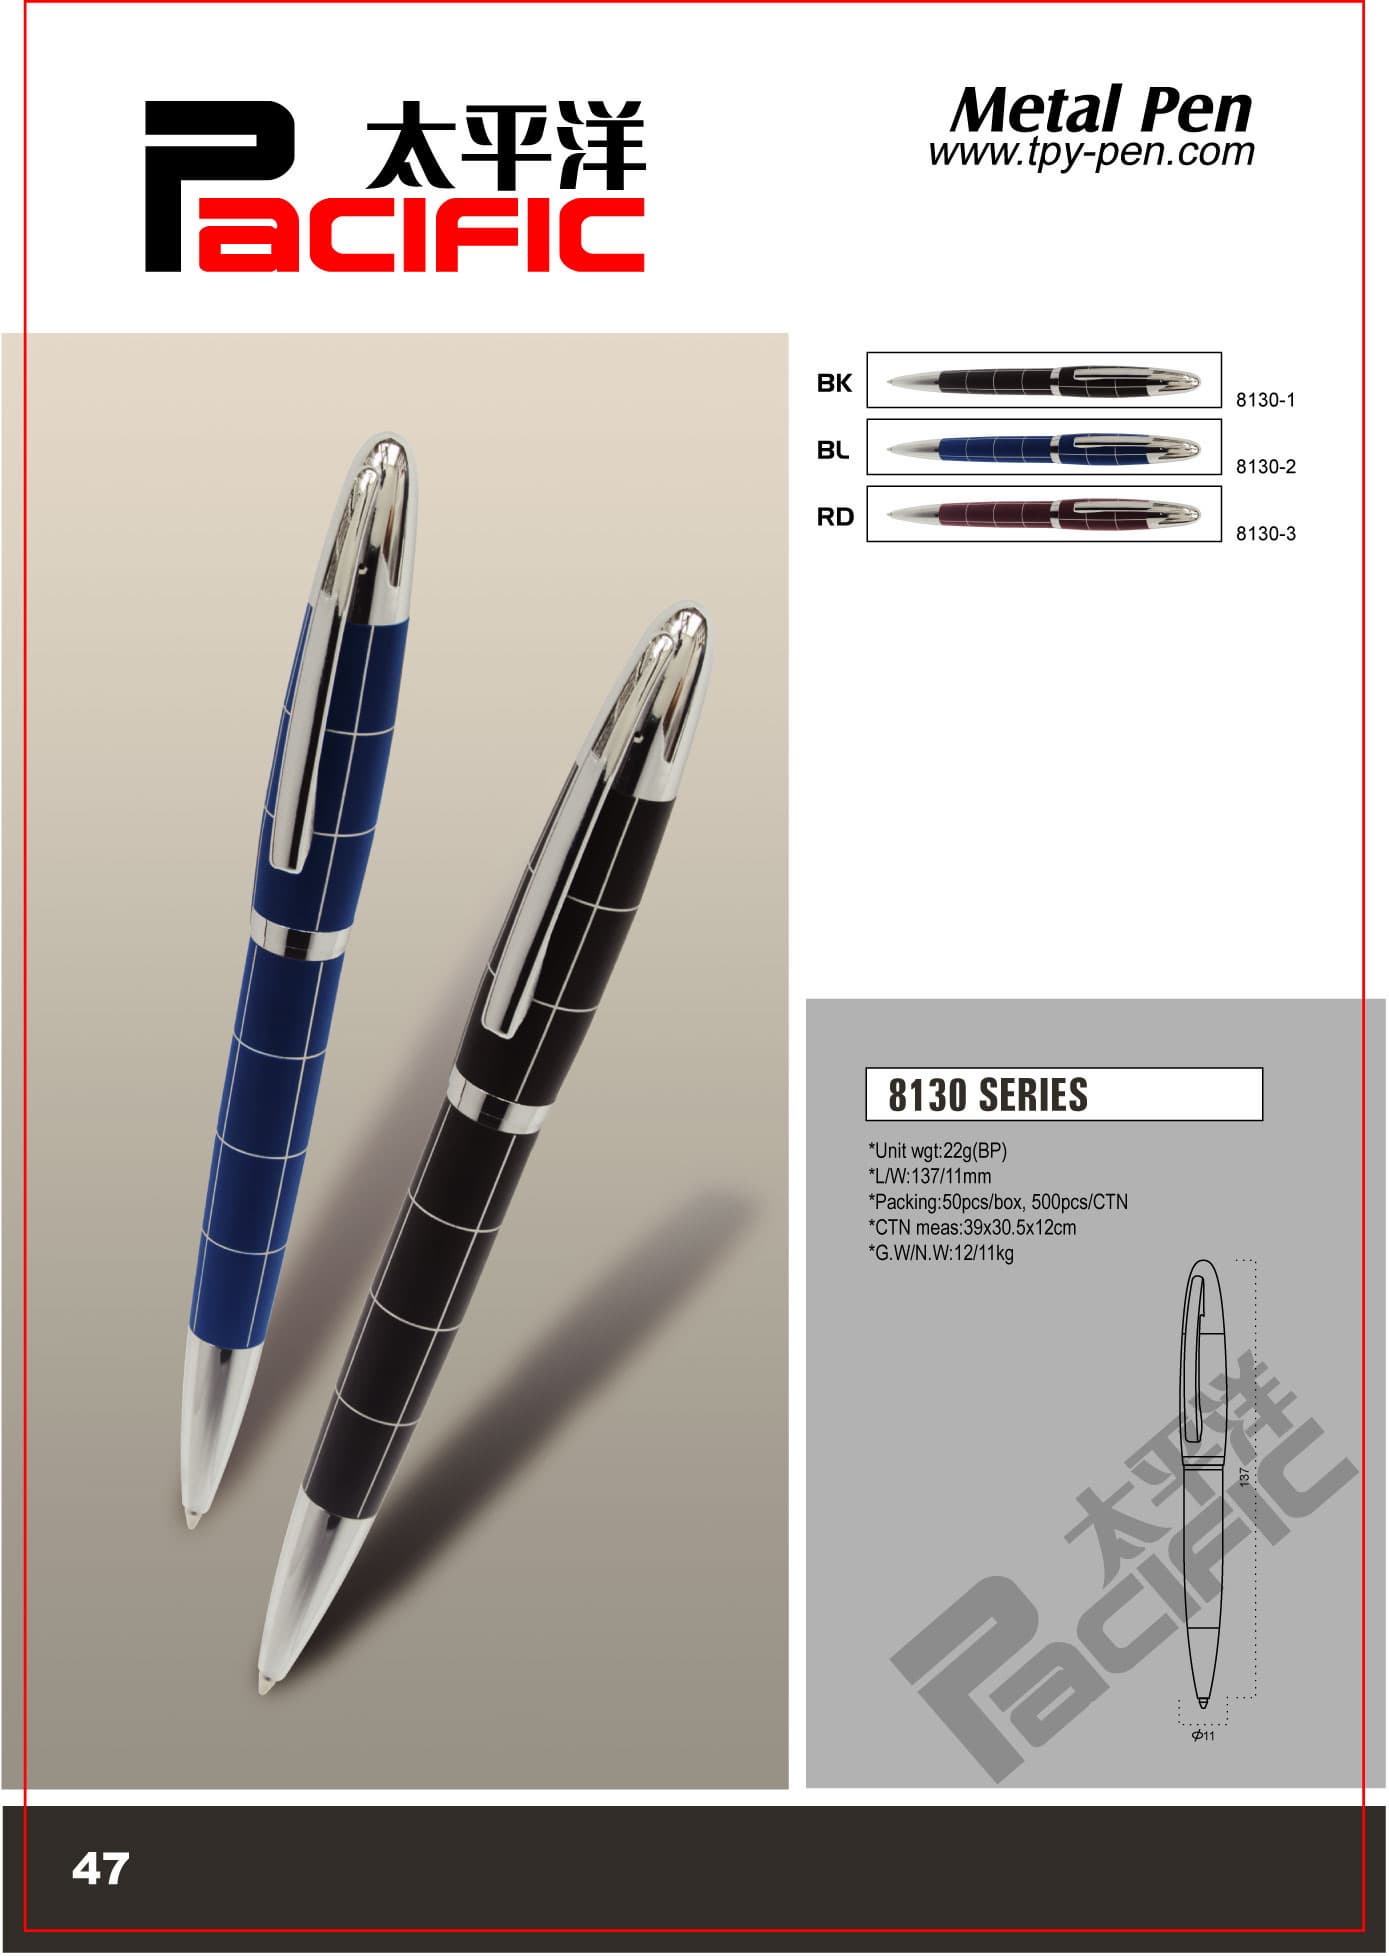 Metal pen,fountain pen,ball pen,roller pen,pen set,gift pen,promotion,advertising series